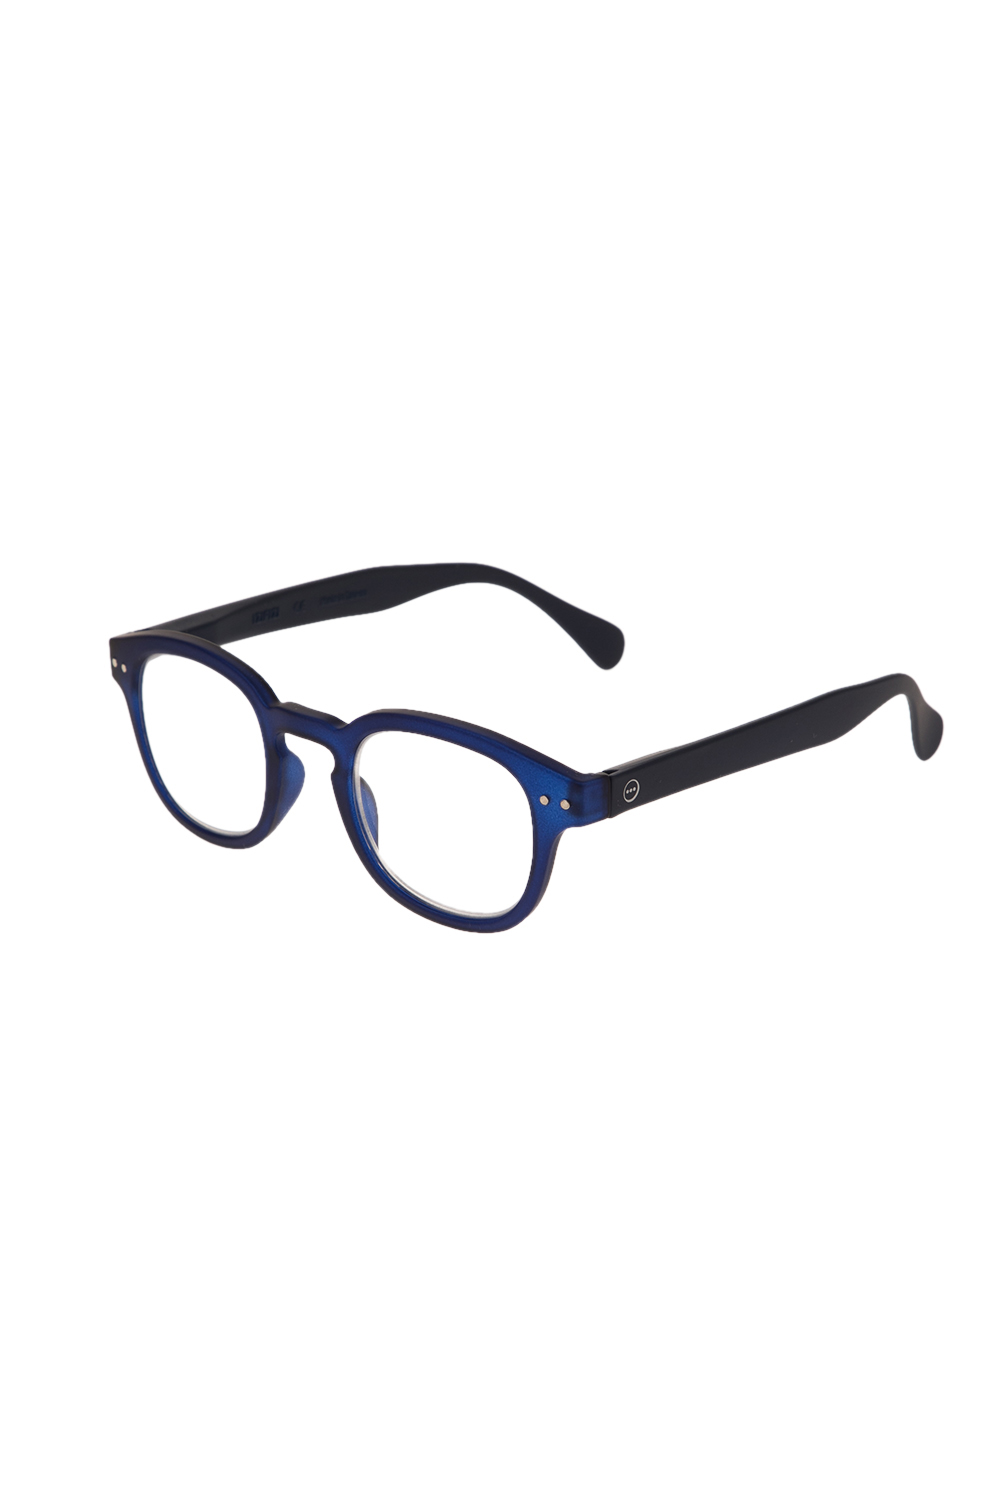 IZIPIZI - Unisex γυαλιά οράσεως IZIPIZI READING #C LIM/EDITION μπλε Γυναικεία/Αξεσουάρ/Γυαλιά/Οράσεως